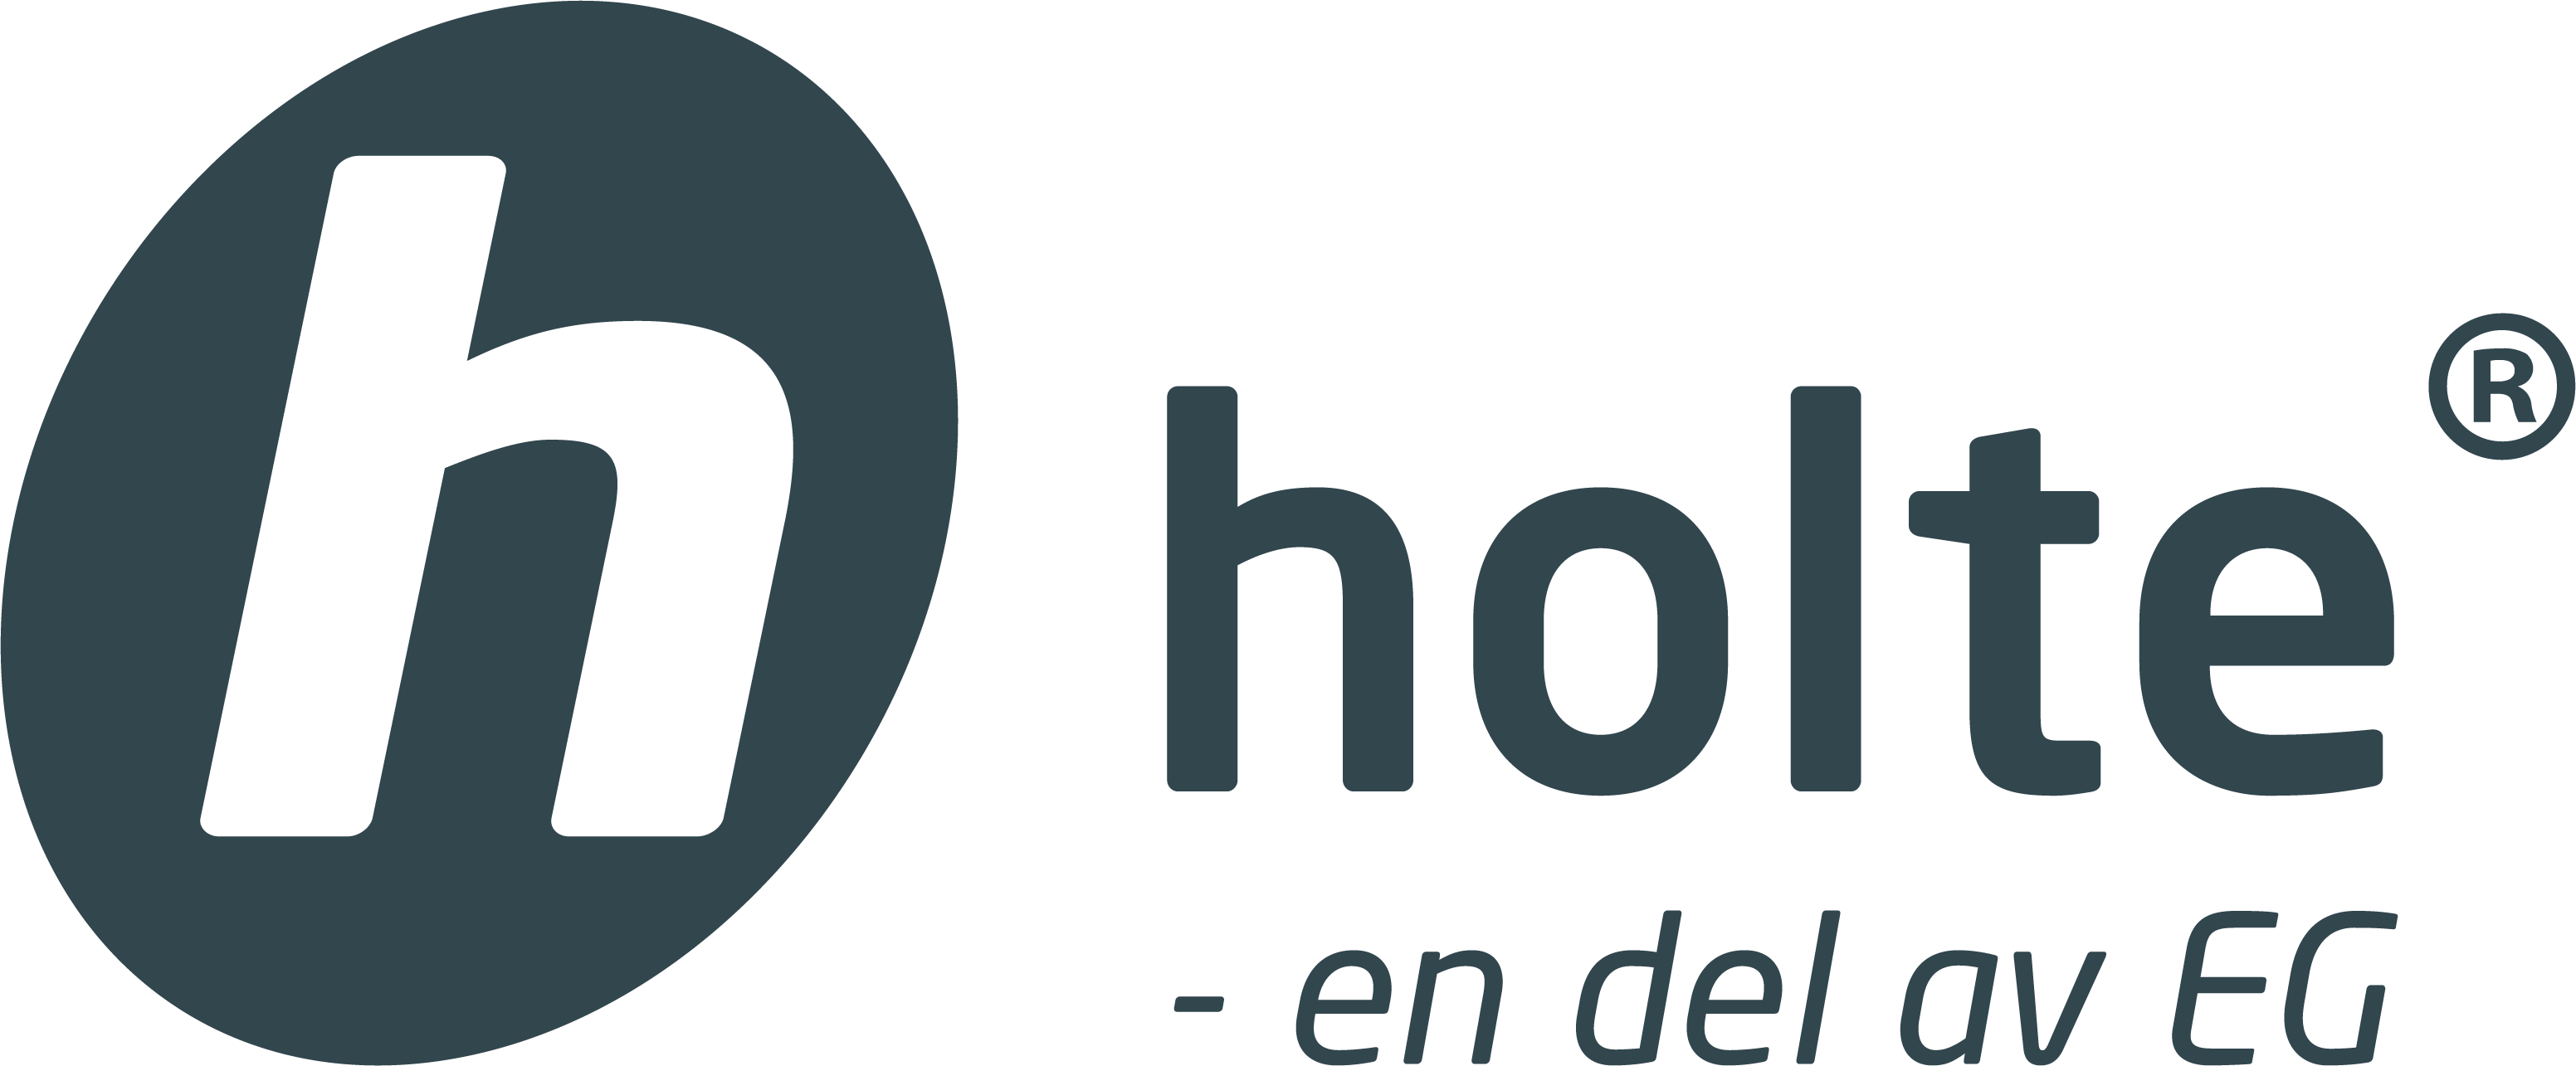 Holte logo